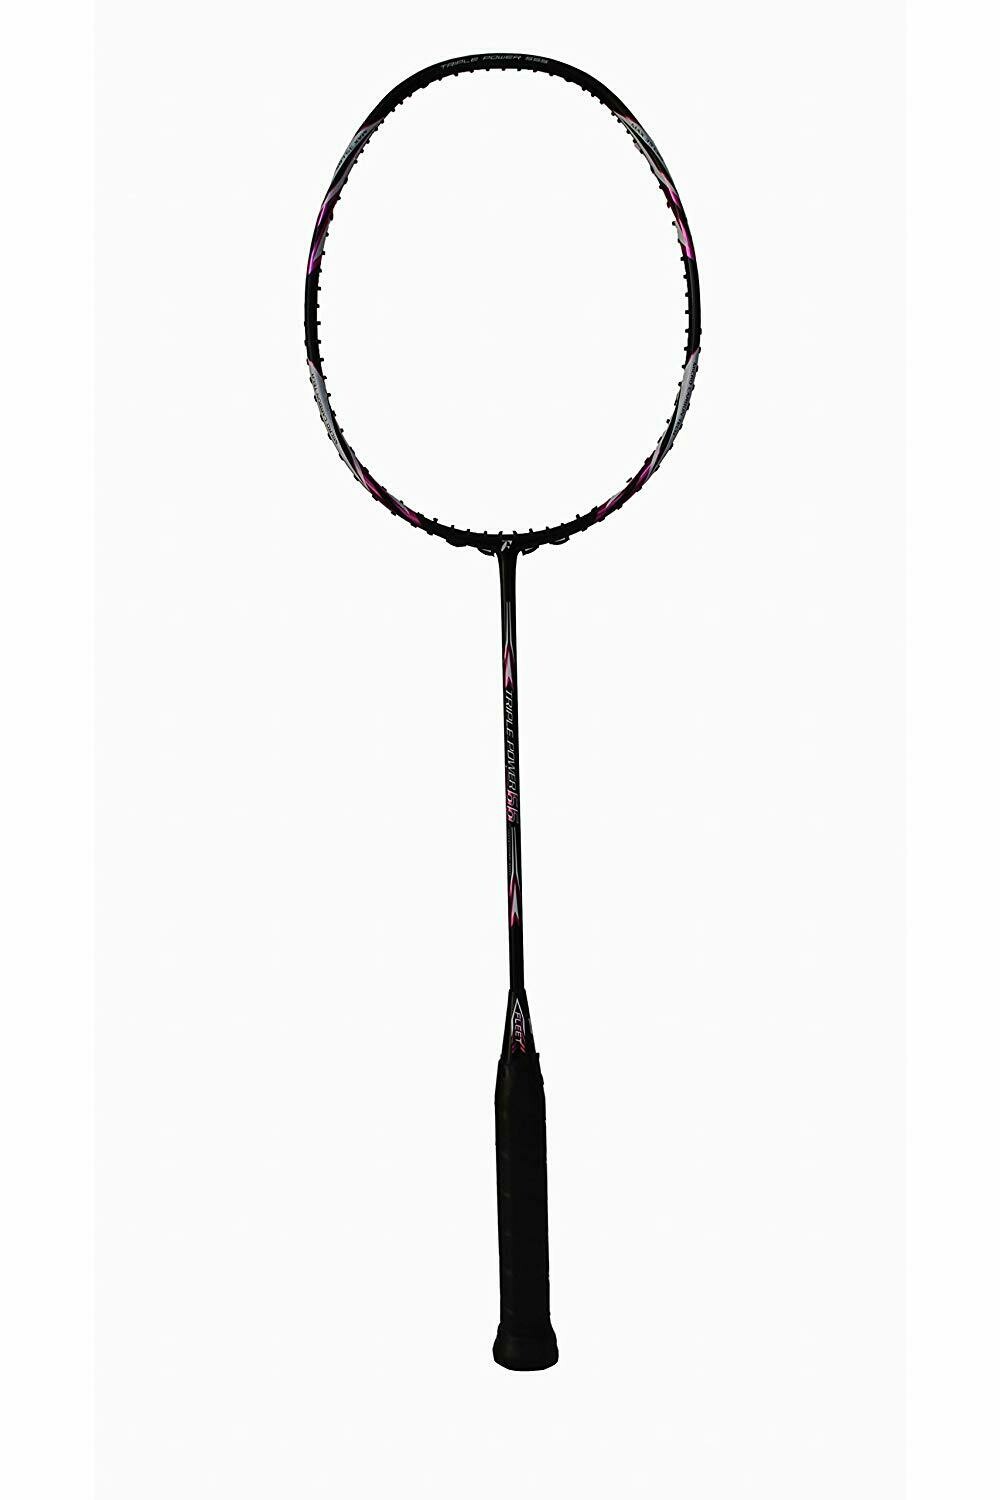 Fleet Triple Power 66 Professional Badminton Racquet Unstrung 4U-G2 35 LBS Power/Control/Speed with Racquet Cover